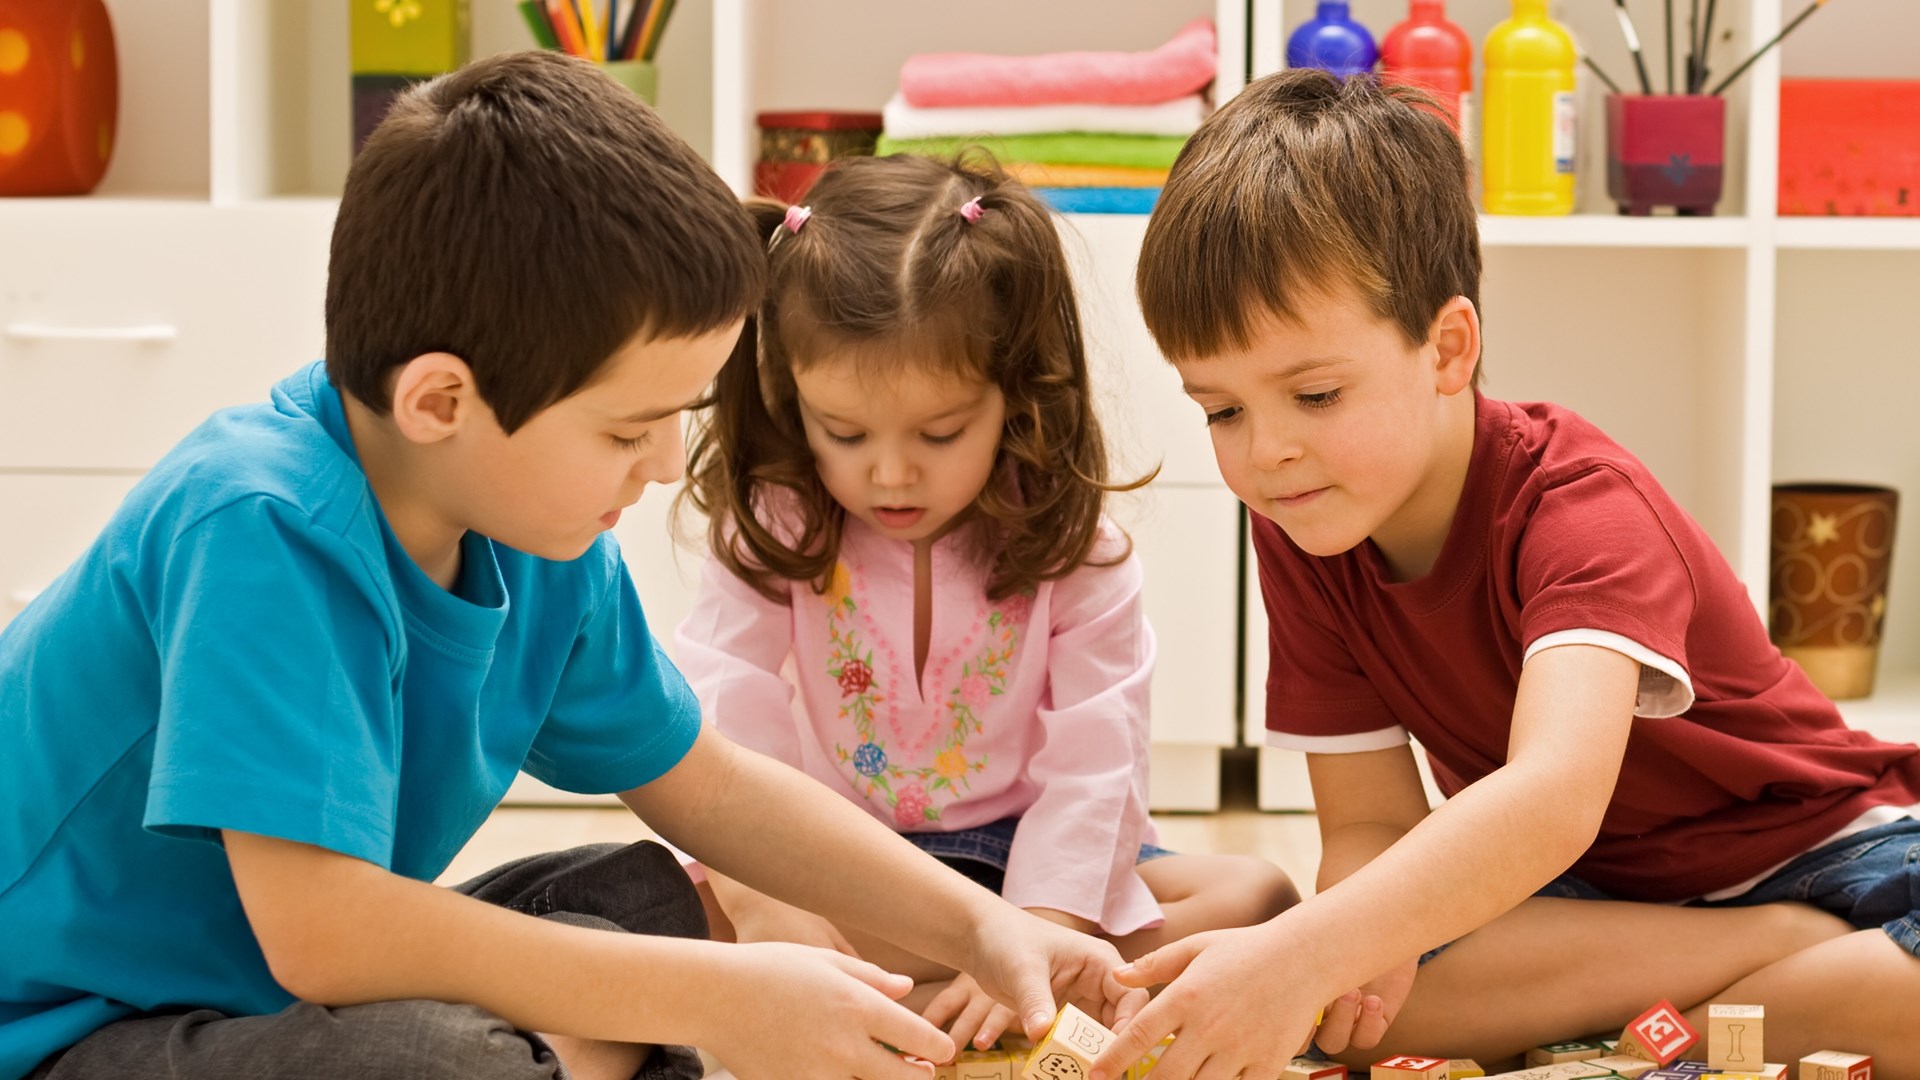 KIDS - Kids Independently Developing Skills | NHS GGC